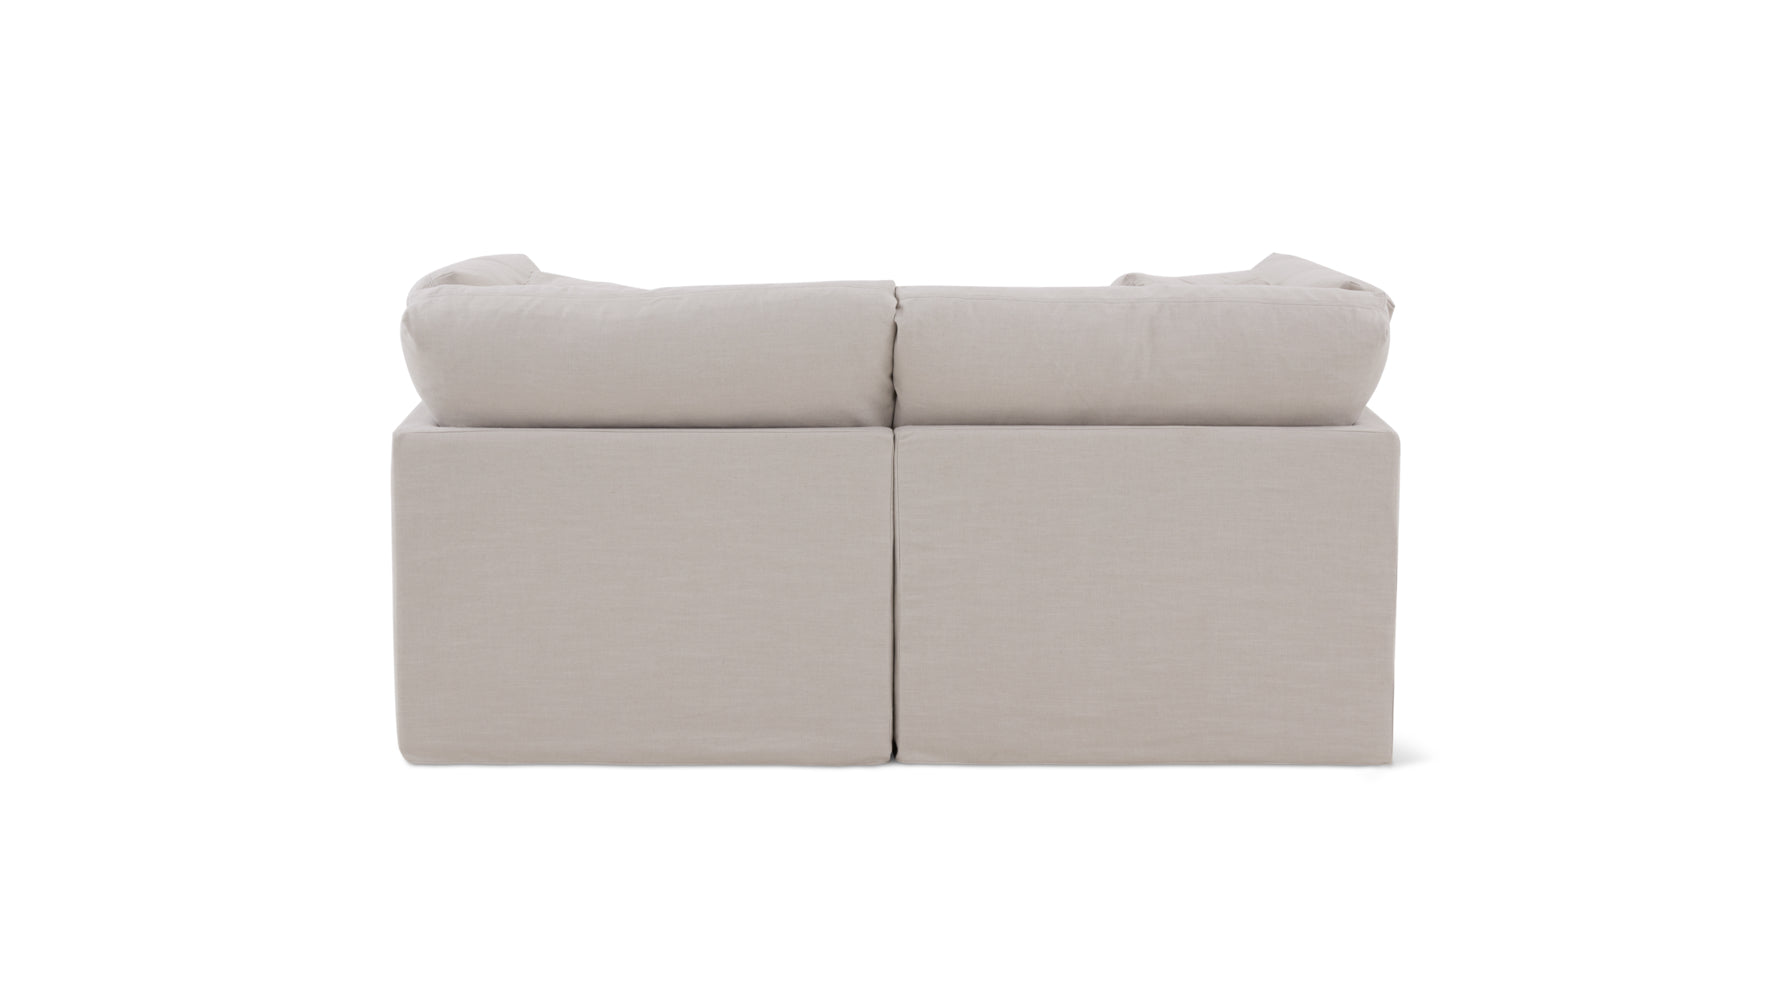 Get Together™ 2-Piece Modular Sofa, Standard, Clay - Image 7